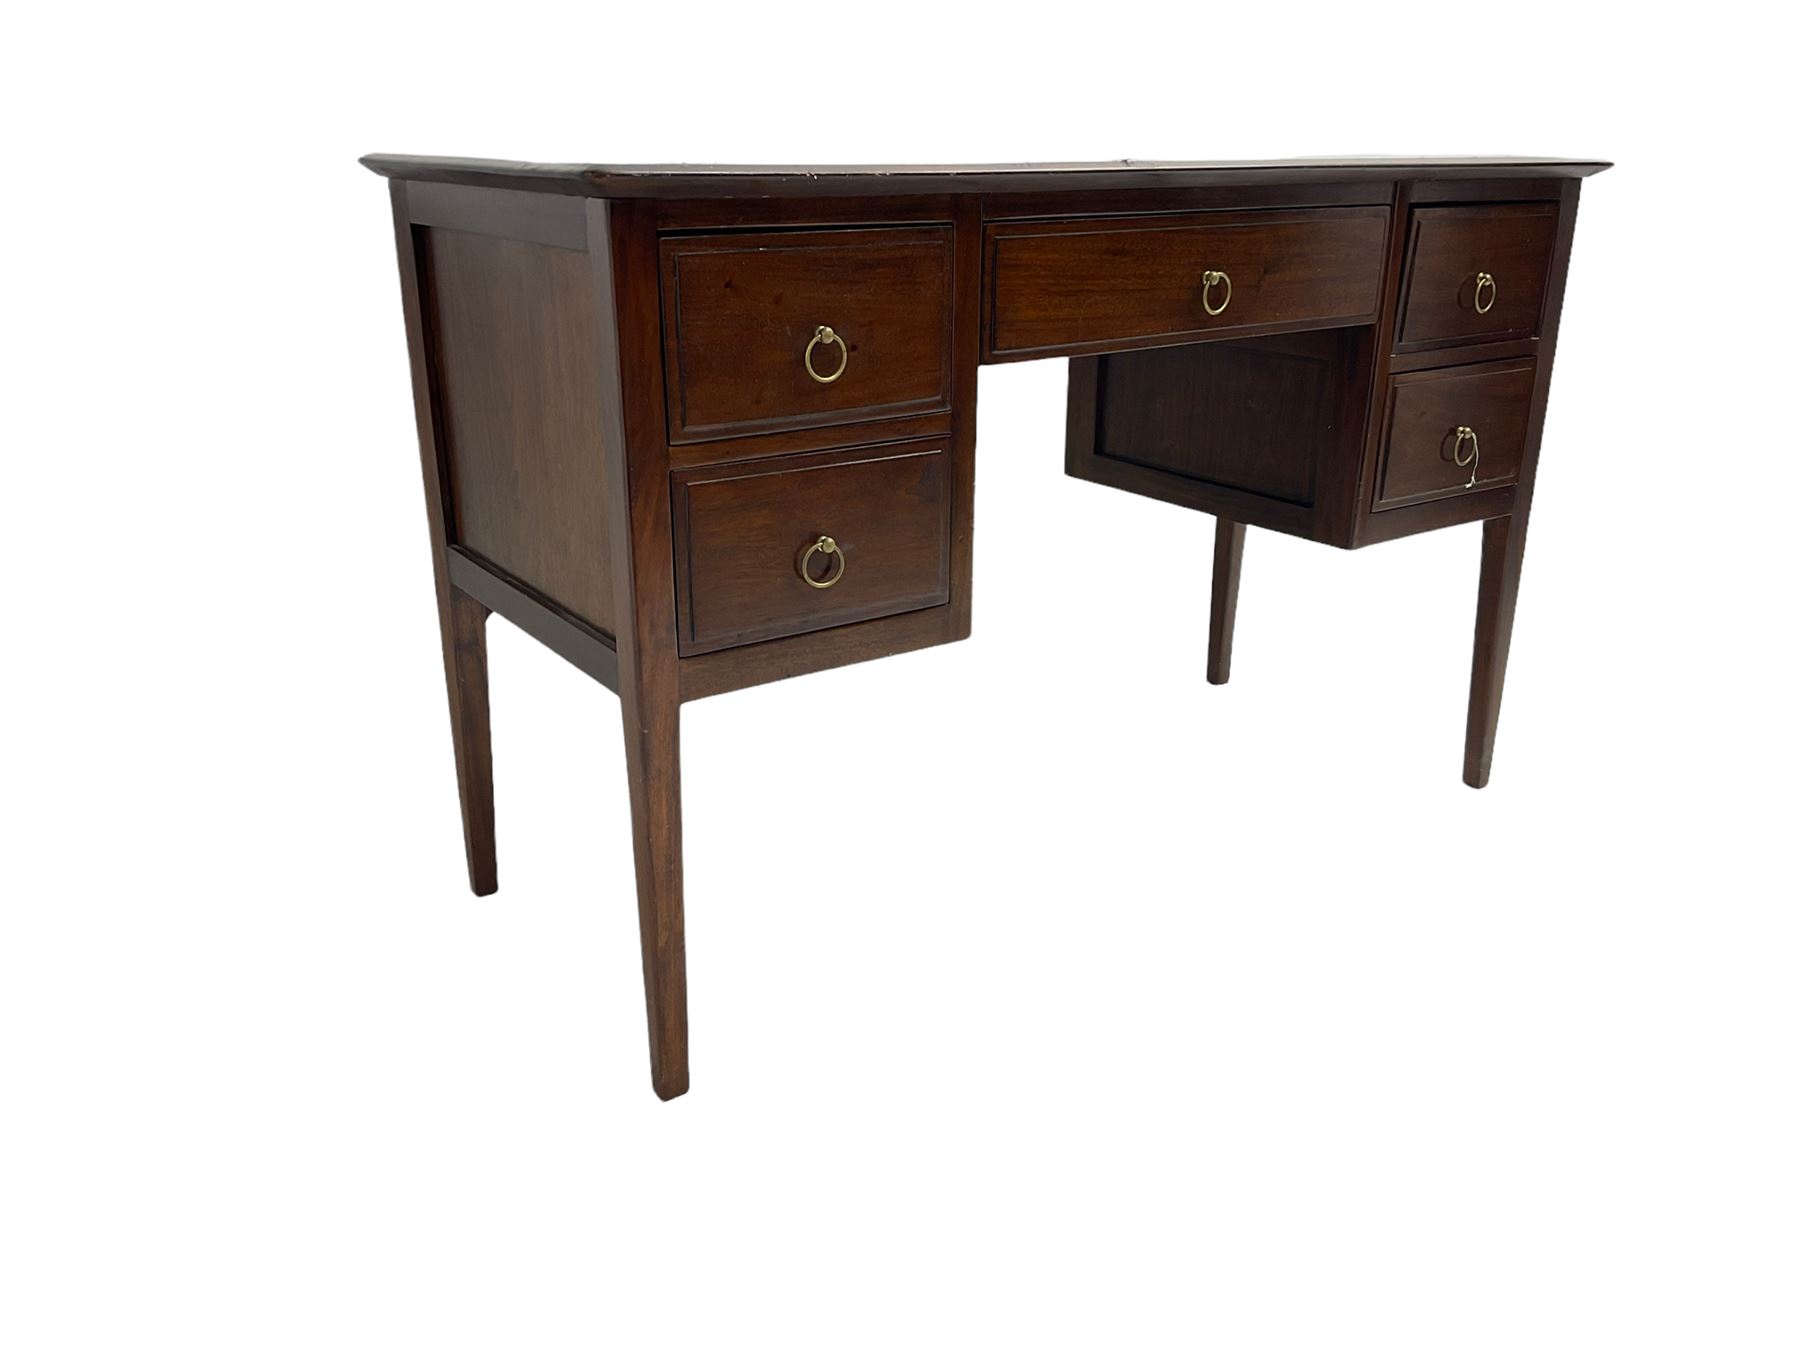 Hardwood kneehole dressing table or desk - Image 7 of 10